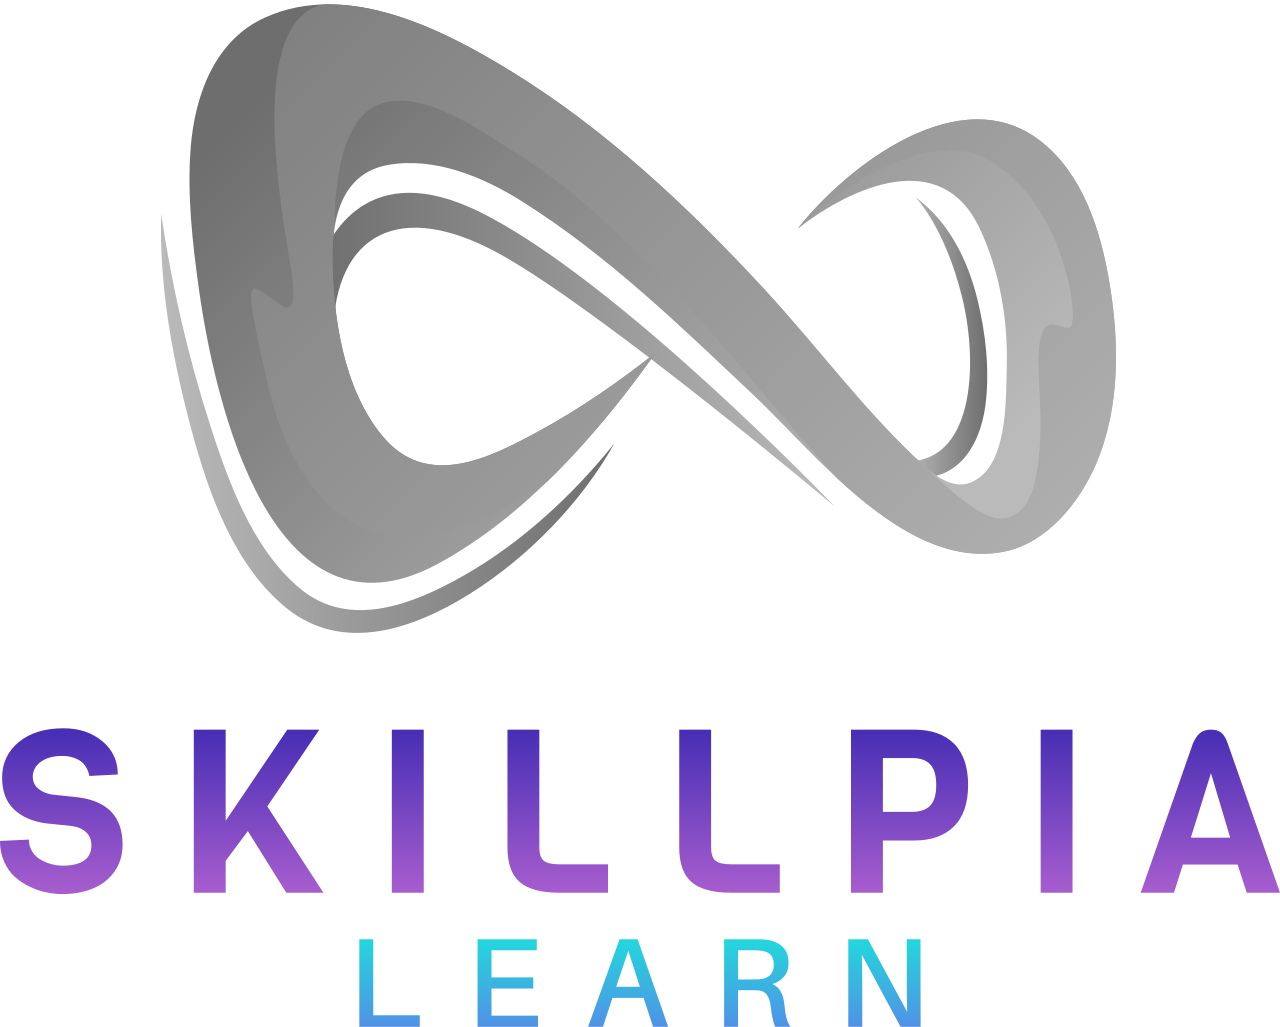 SKILLPIA's logo